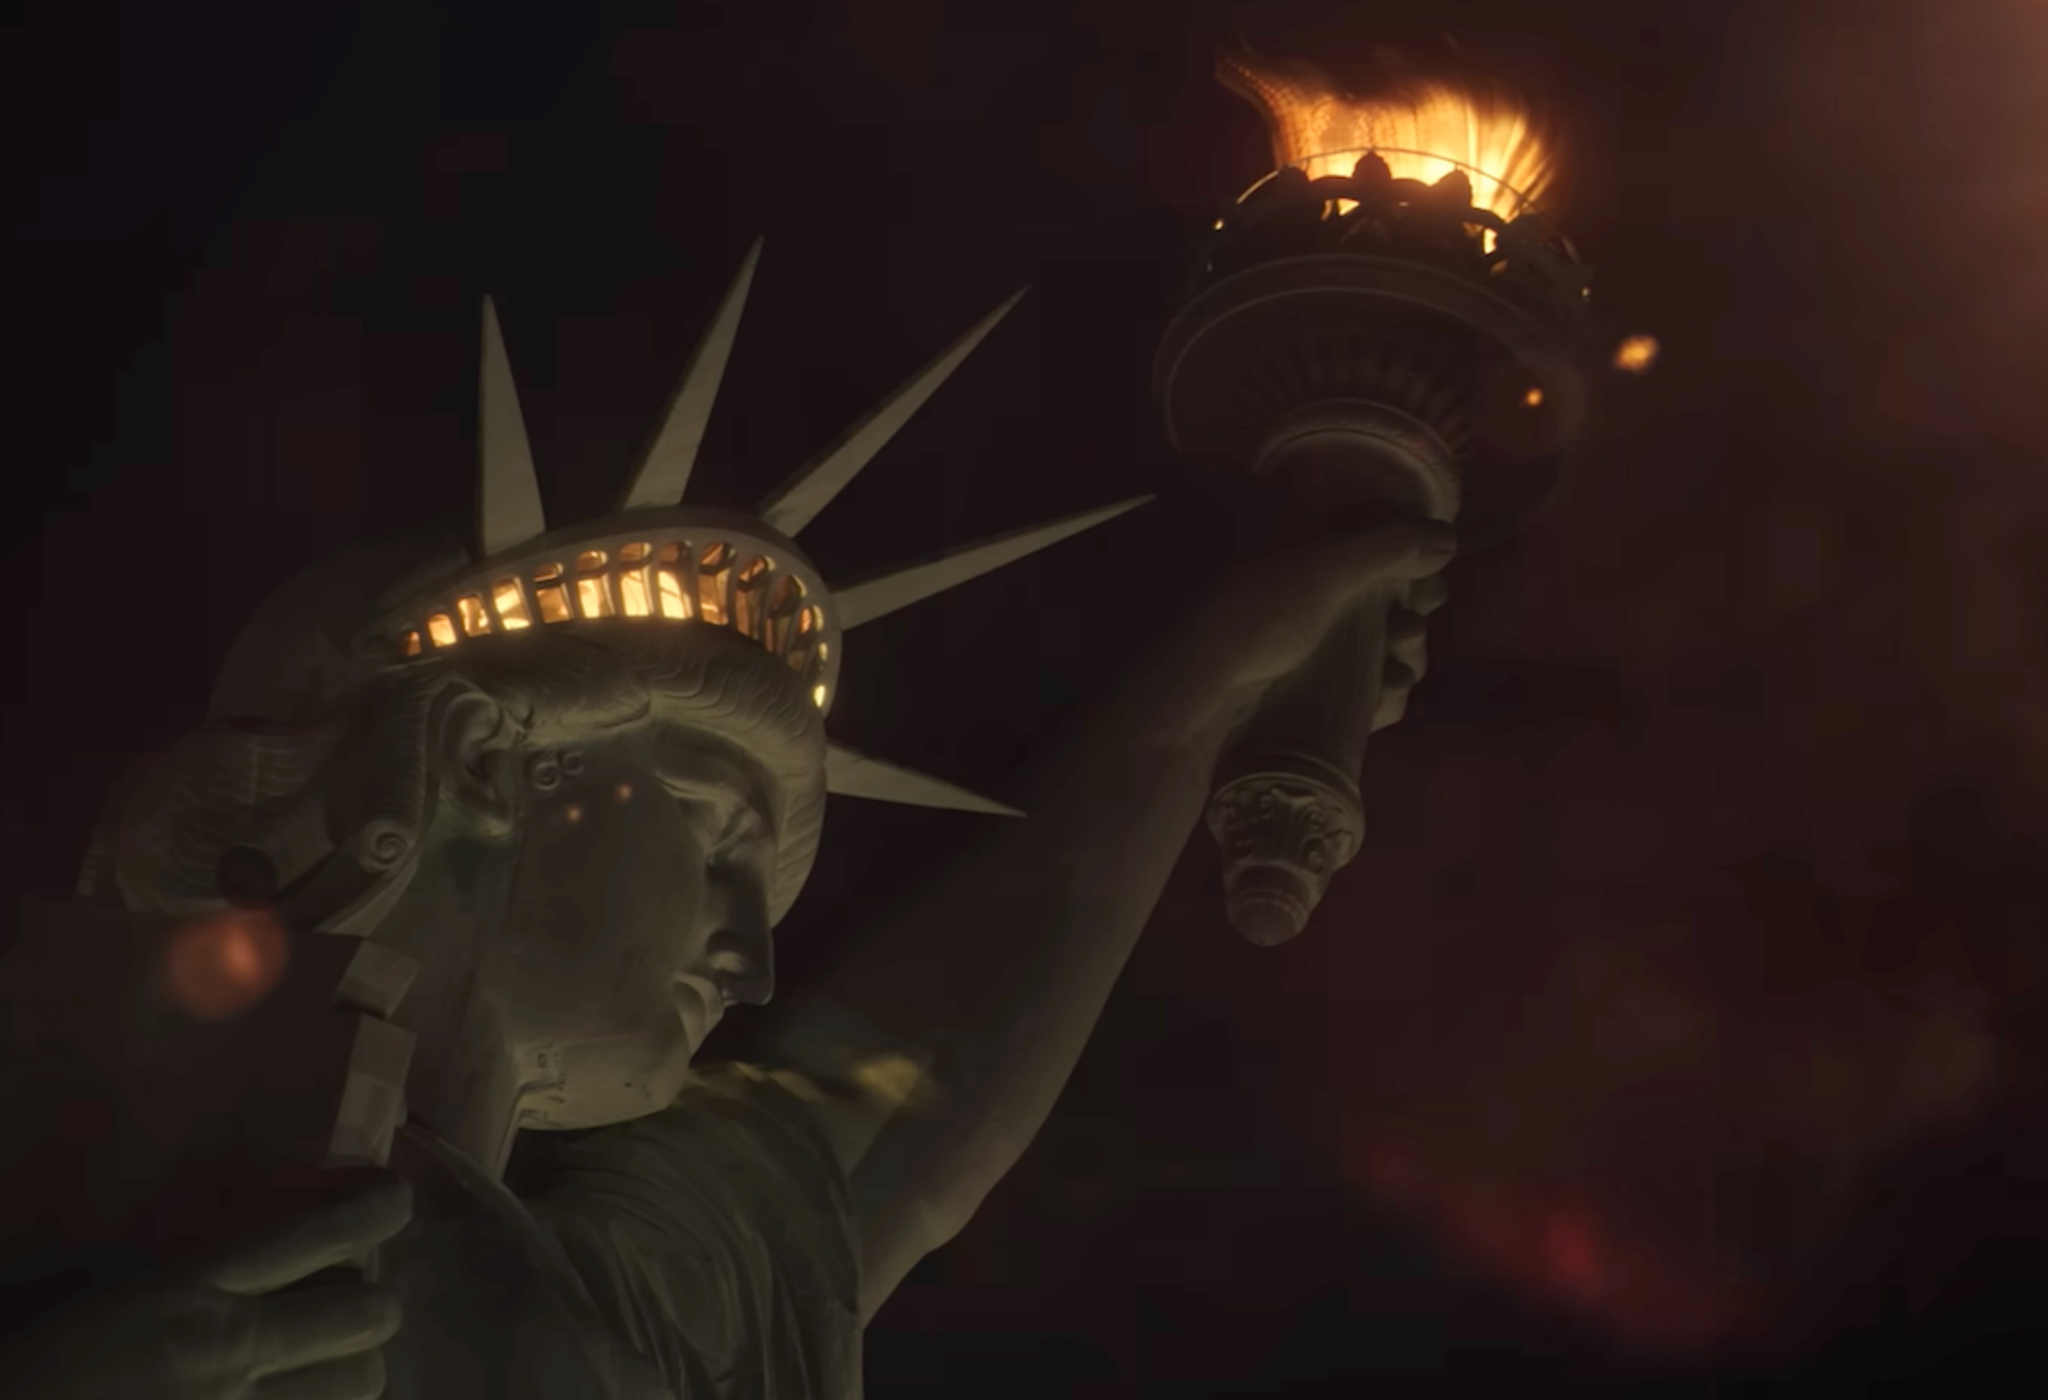 La Estatua de la Libertad iluminada por el fuego en una imagen de 'Megalópolis', de Francis Ford Coppola